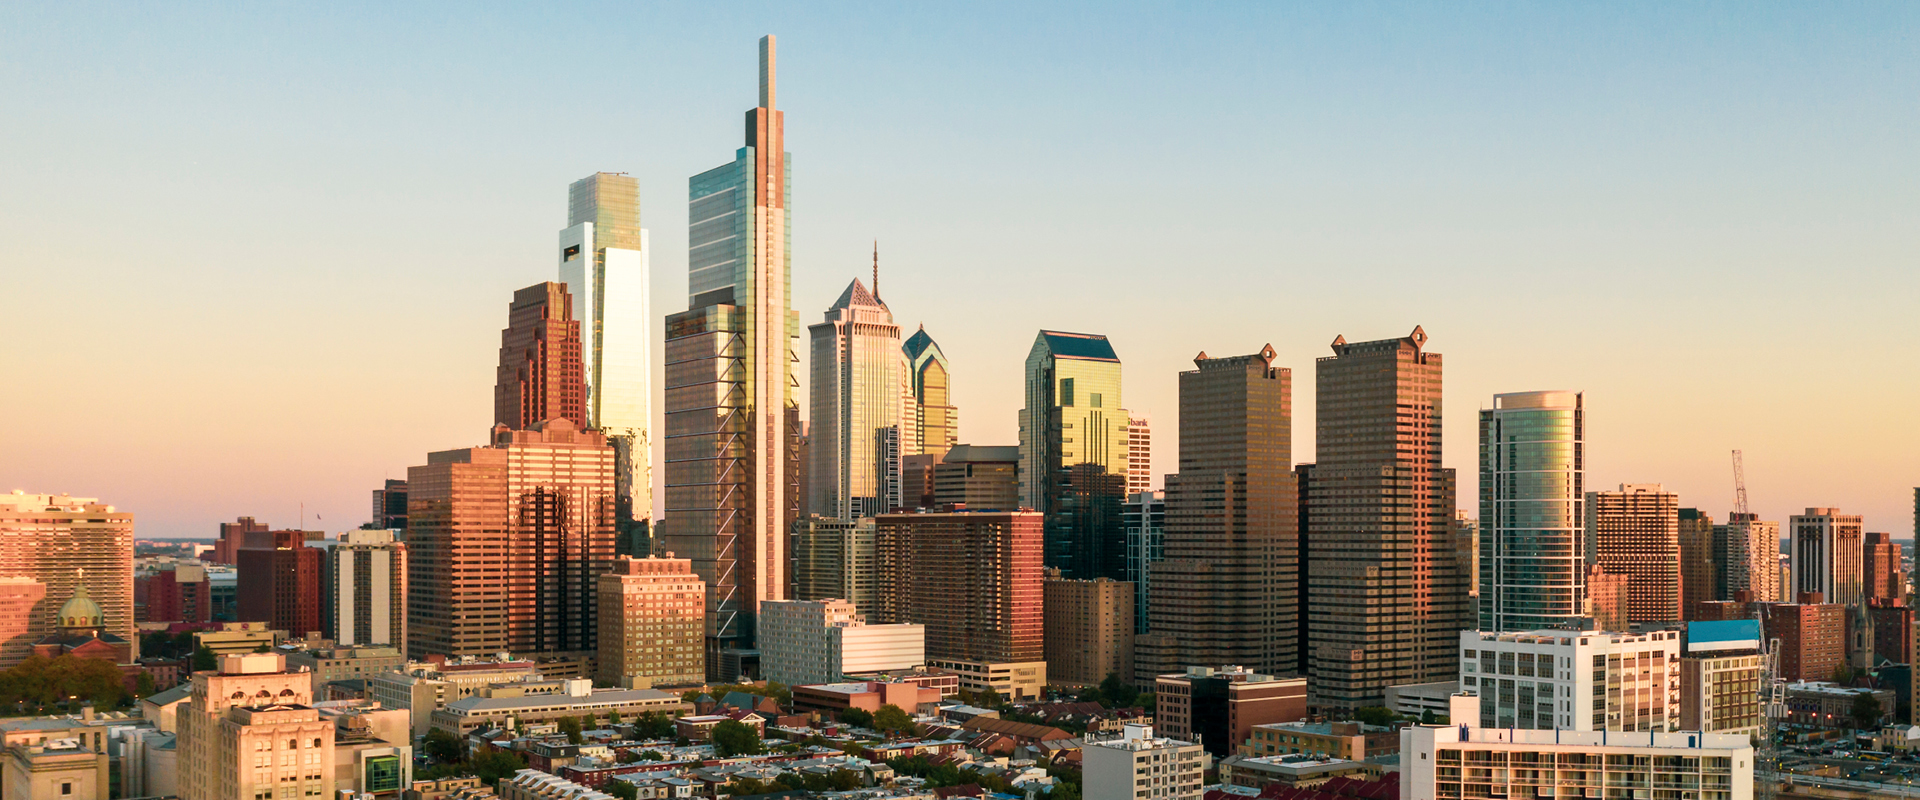 Philadelphia PA city skyline